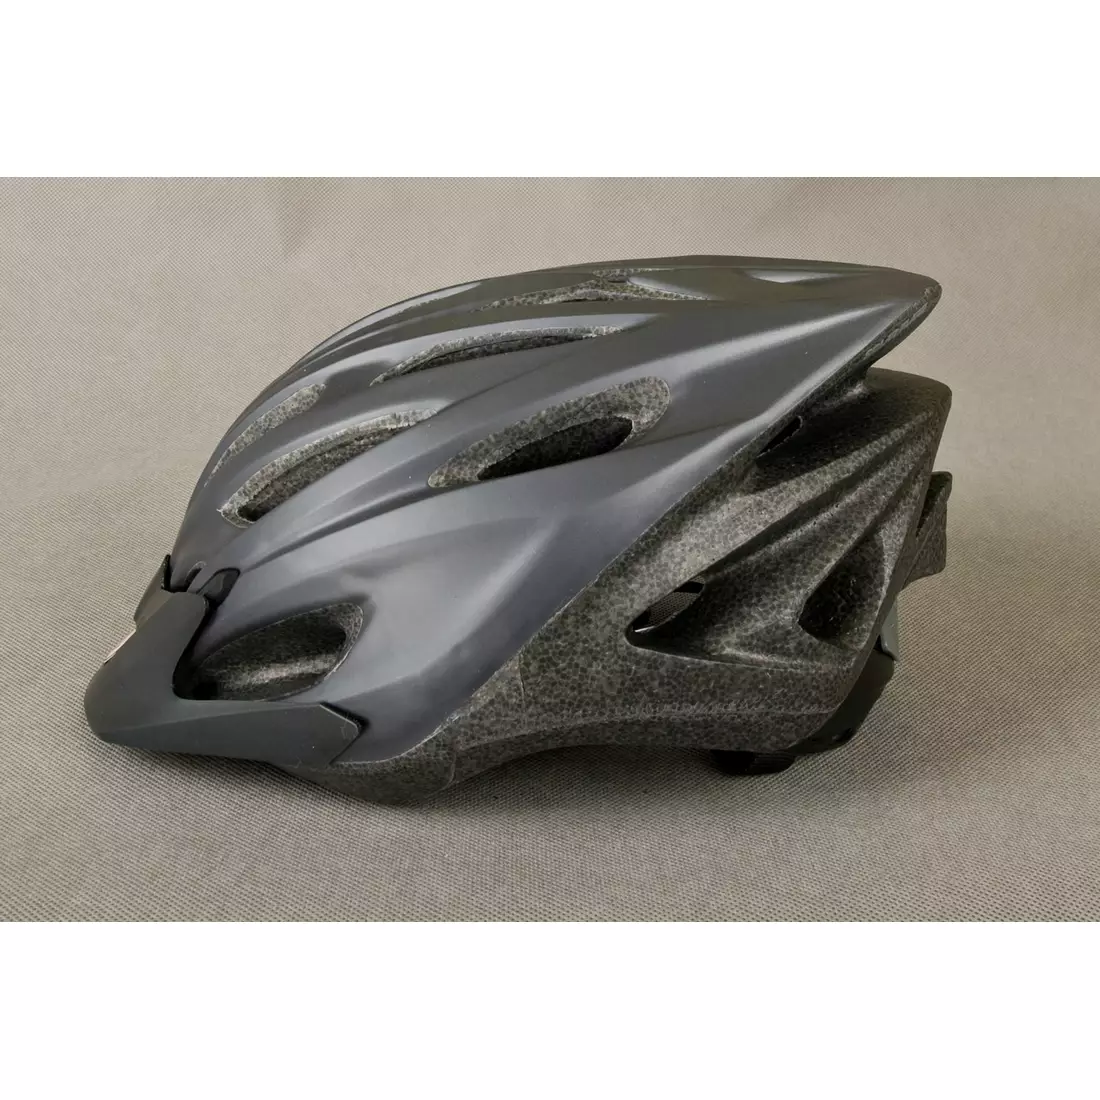 BELL kask rowerowy SOLAR FLARE black titanium